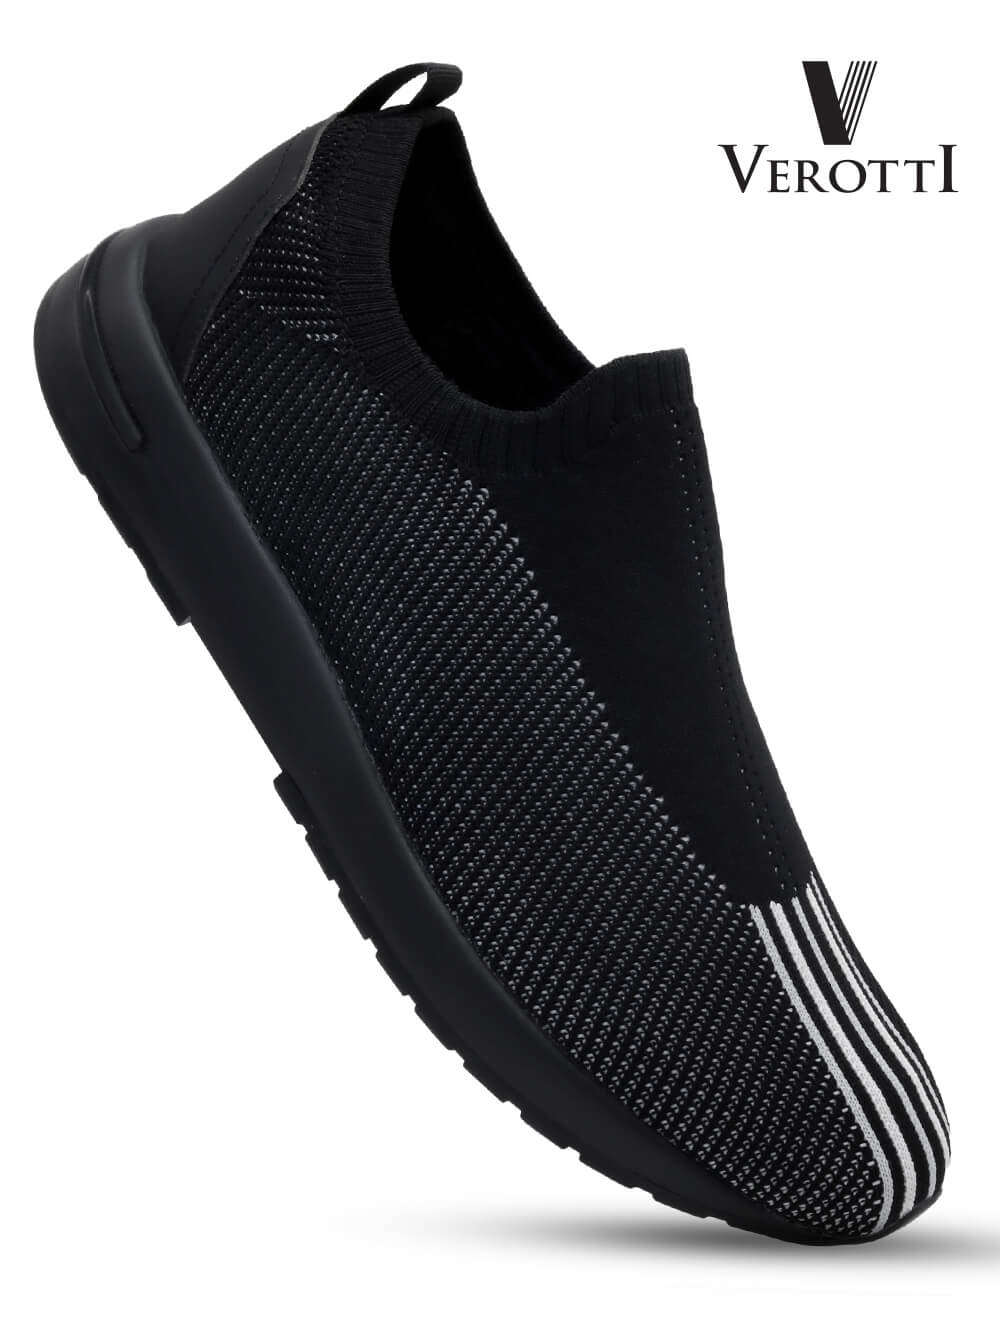 Verotti[X343]922 Full Black Gents Shoes